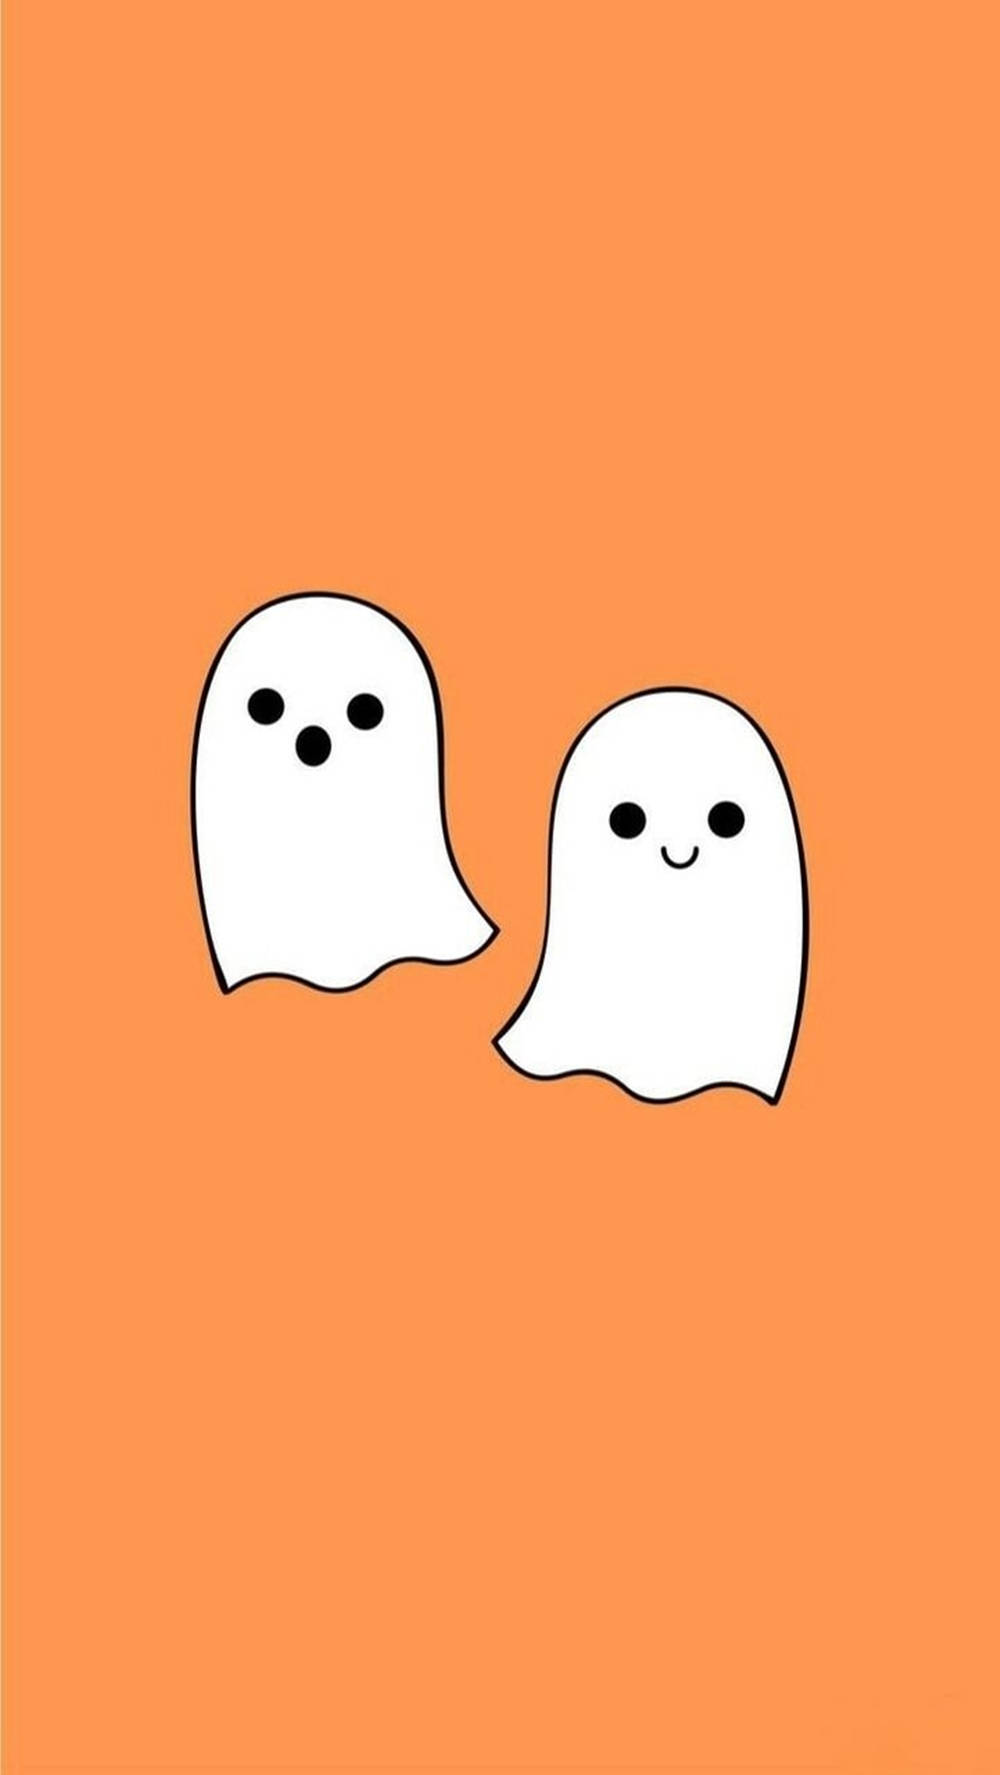 Two Friendly Ghosts Aesthetic Orange Wallpaper